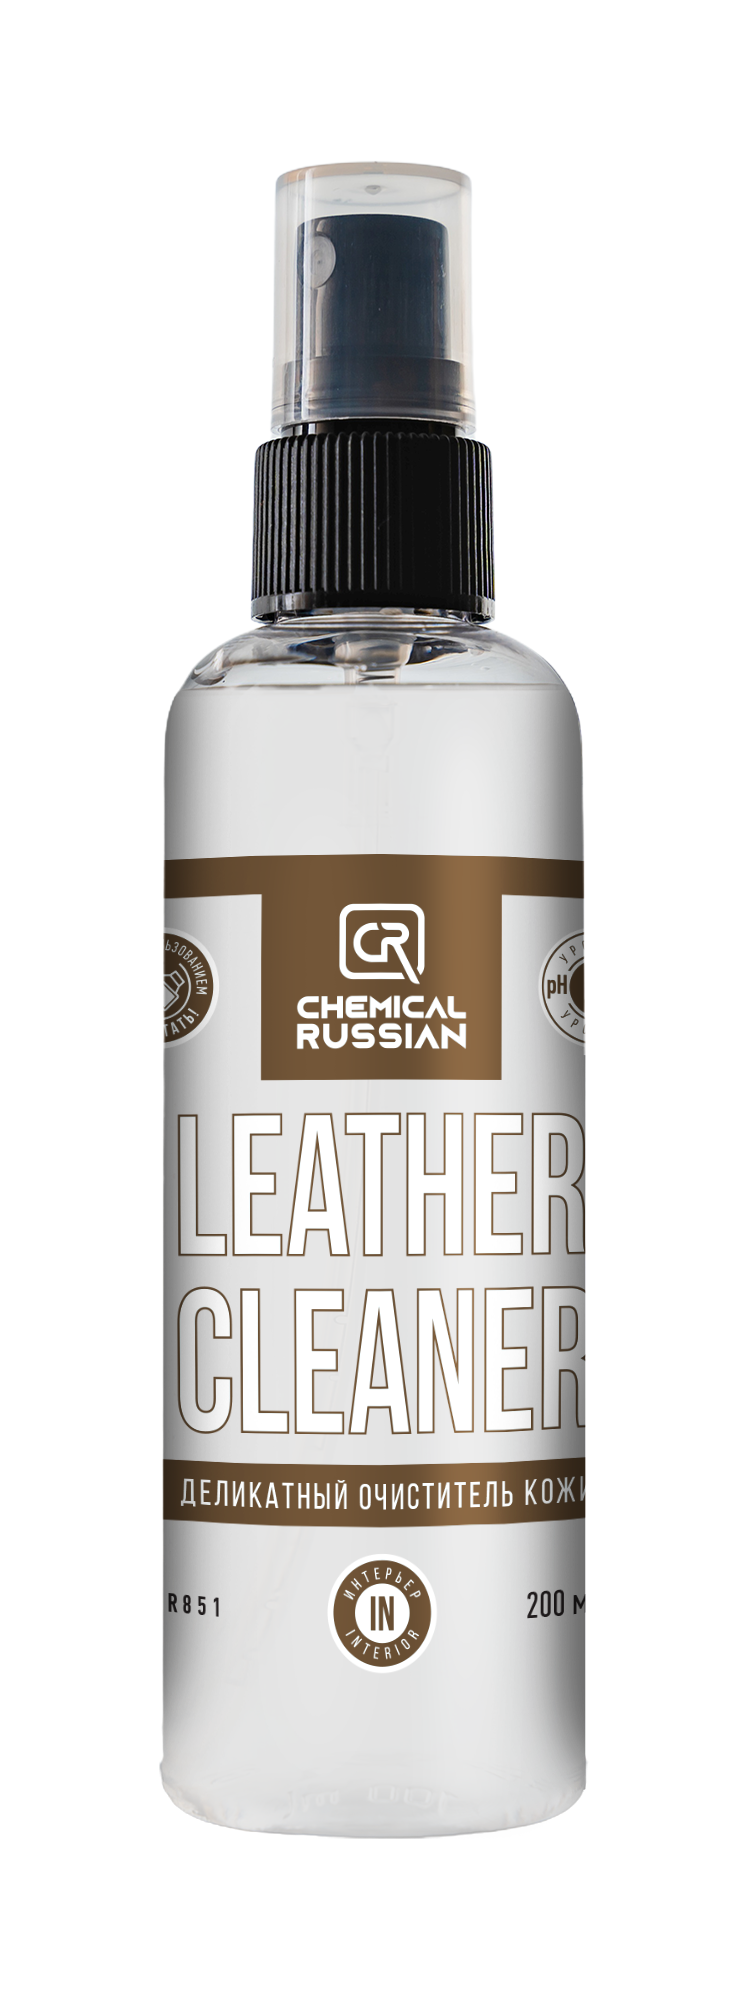 Leather Cleaner - Очиститель кожи, 100 мл, Chemical Russian